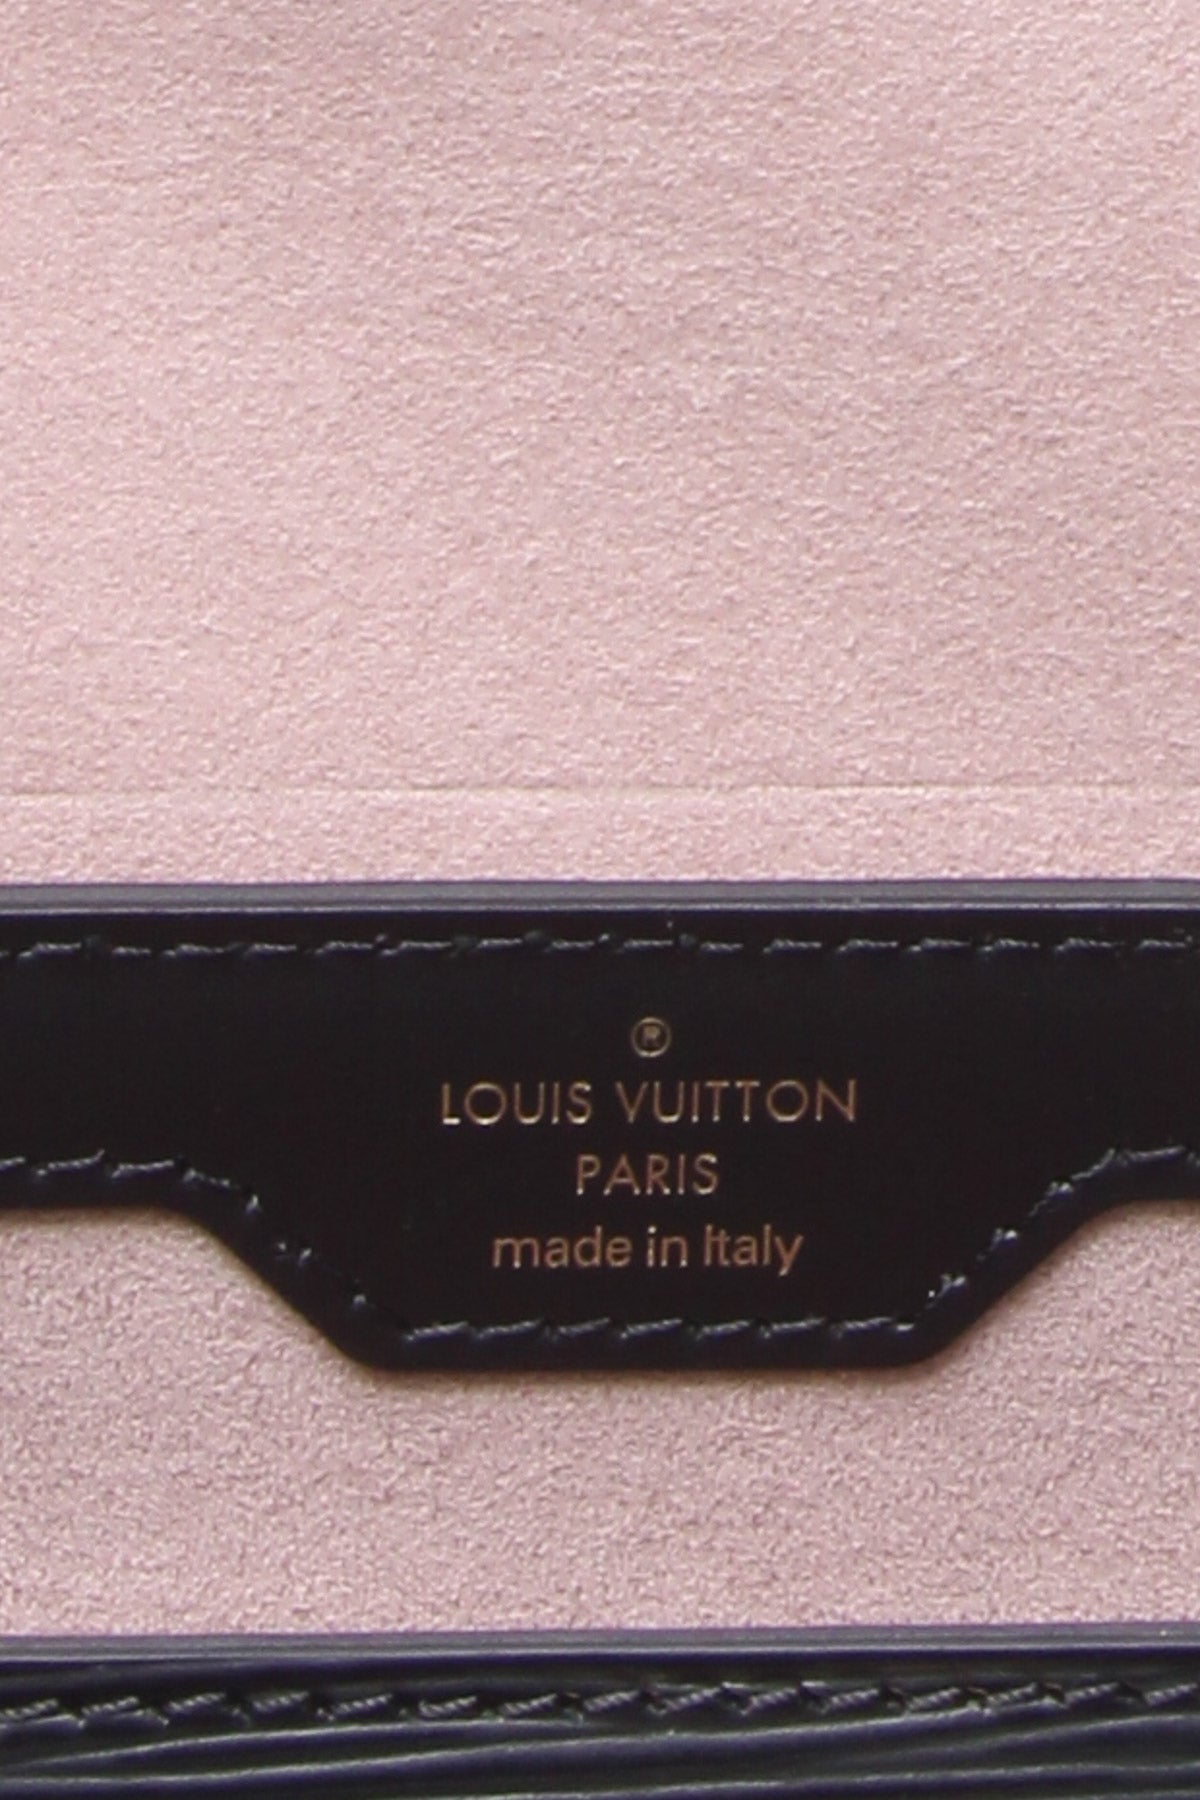 Decoding Louis Vuitton Date Codes – LeidiDonna Luxe